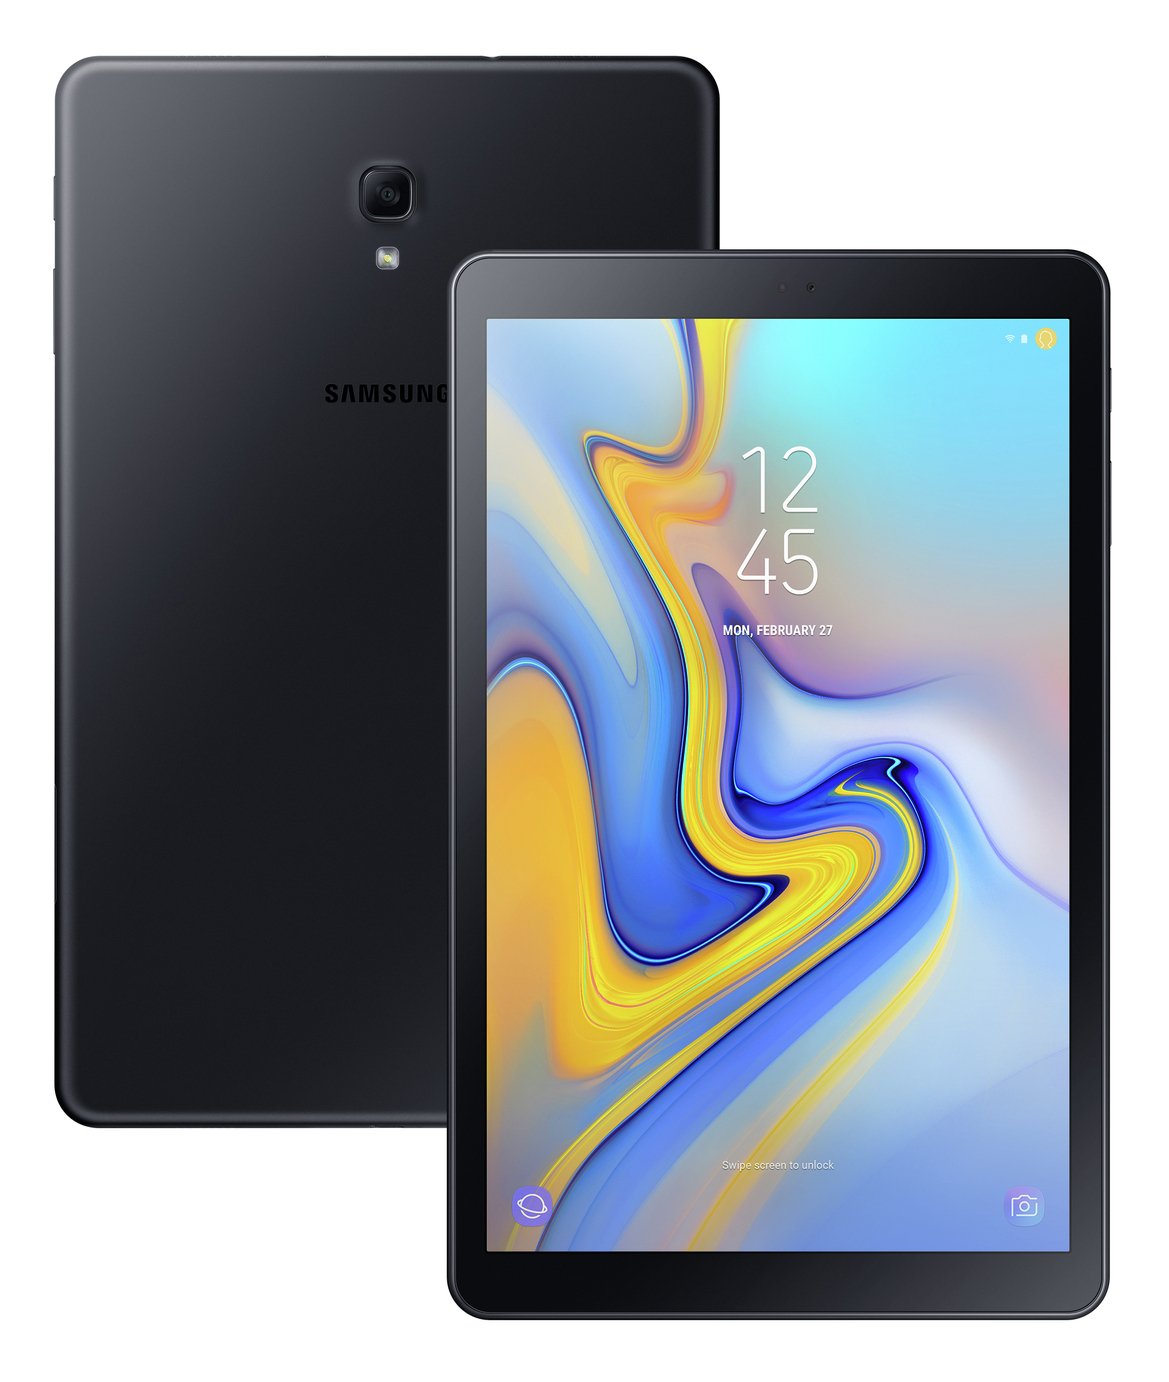 Samsung Galaxy Tab A 10.5 Inch 32GB LTE Tablet review